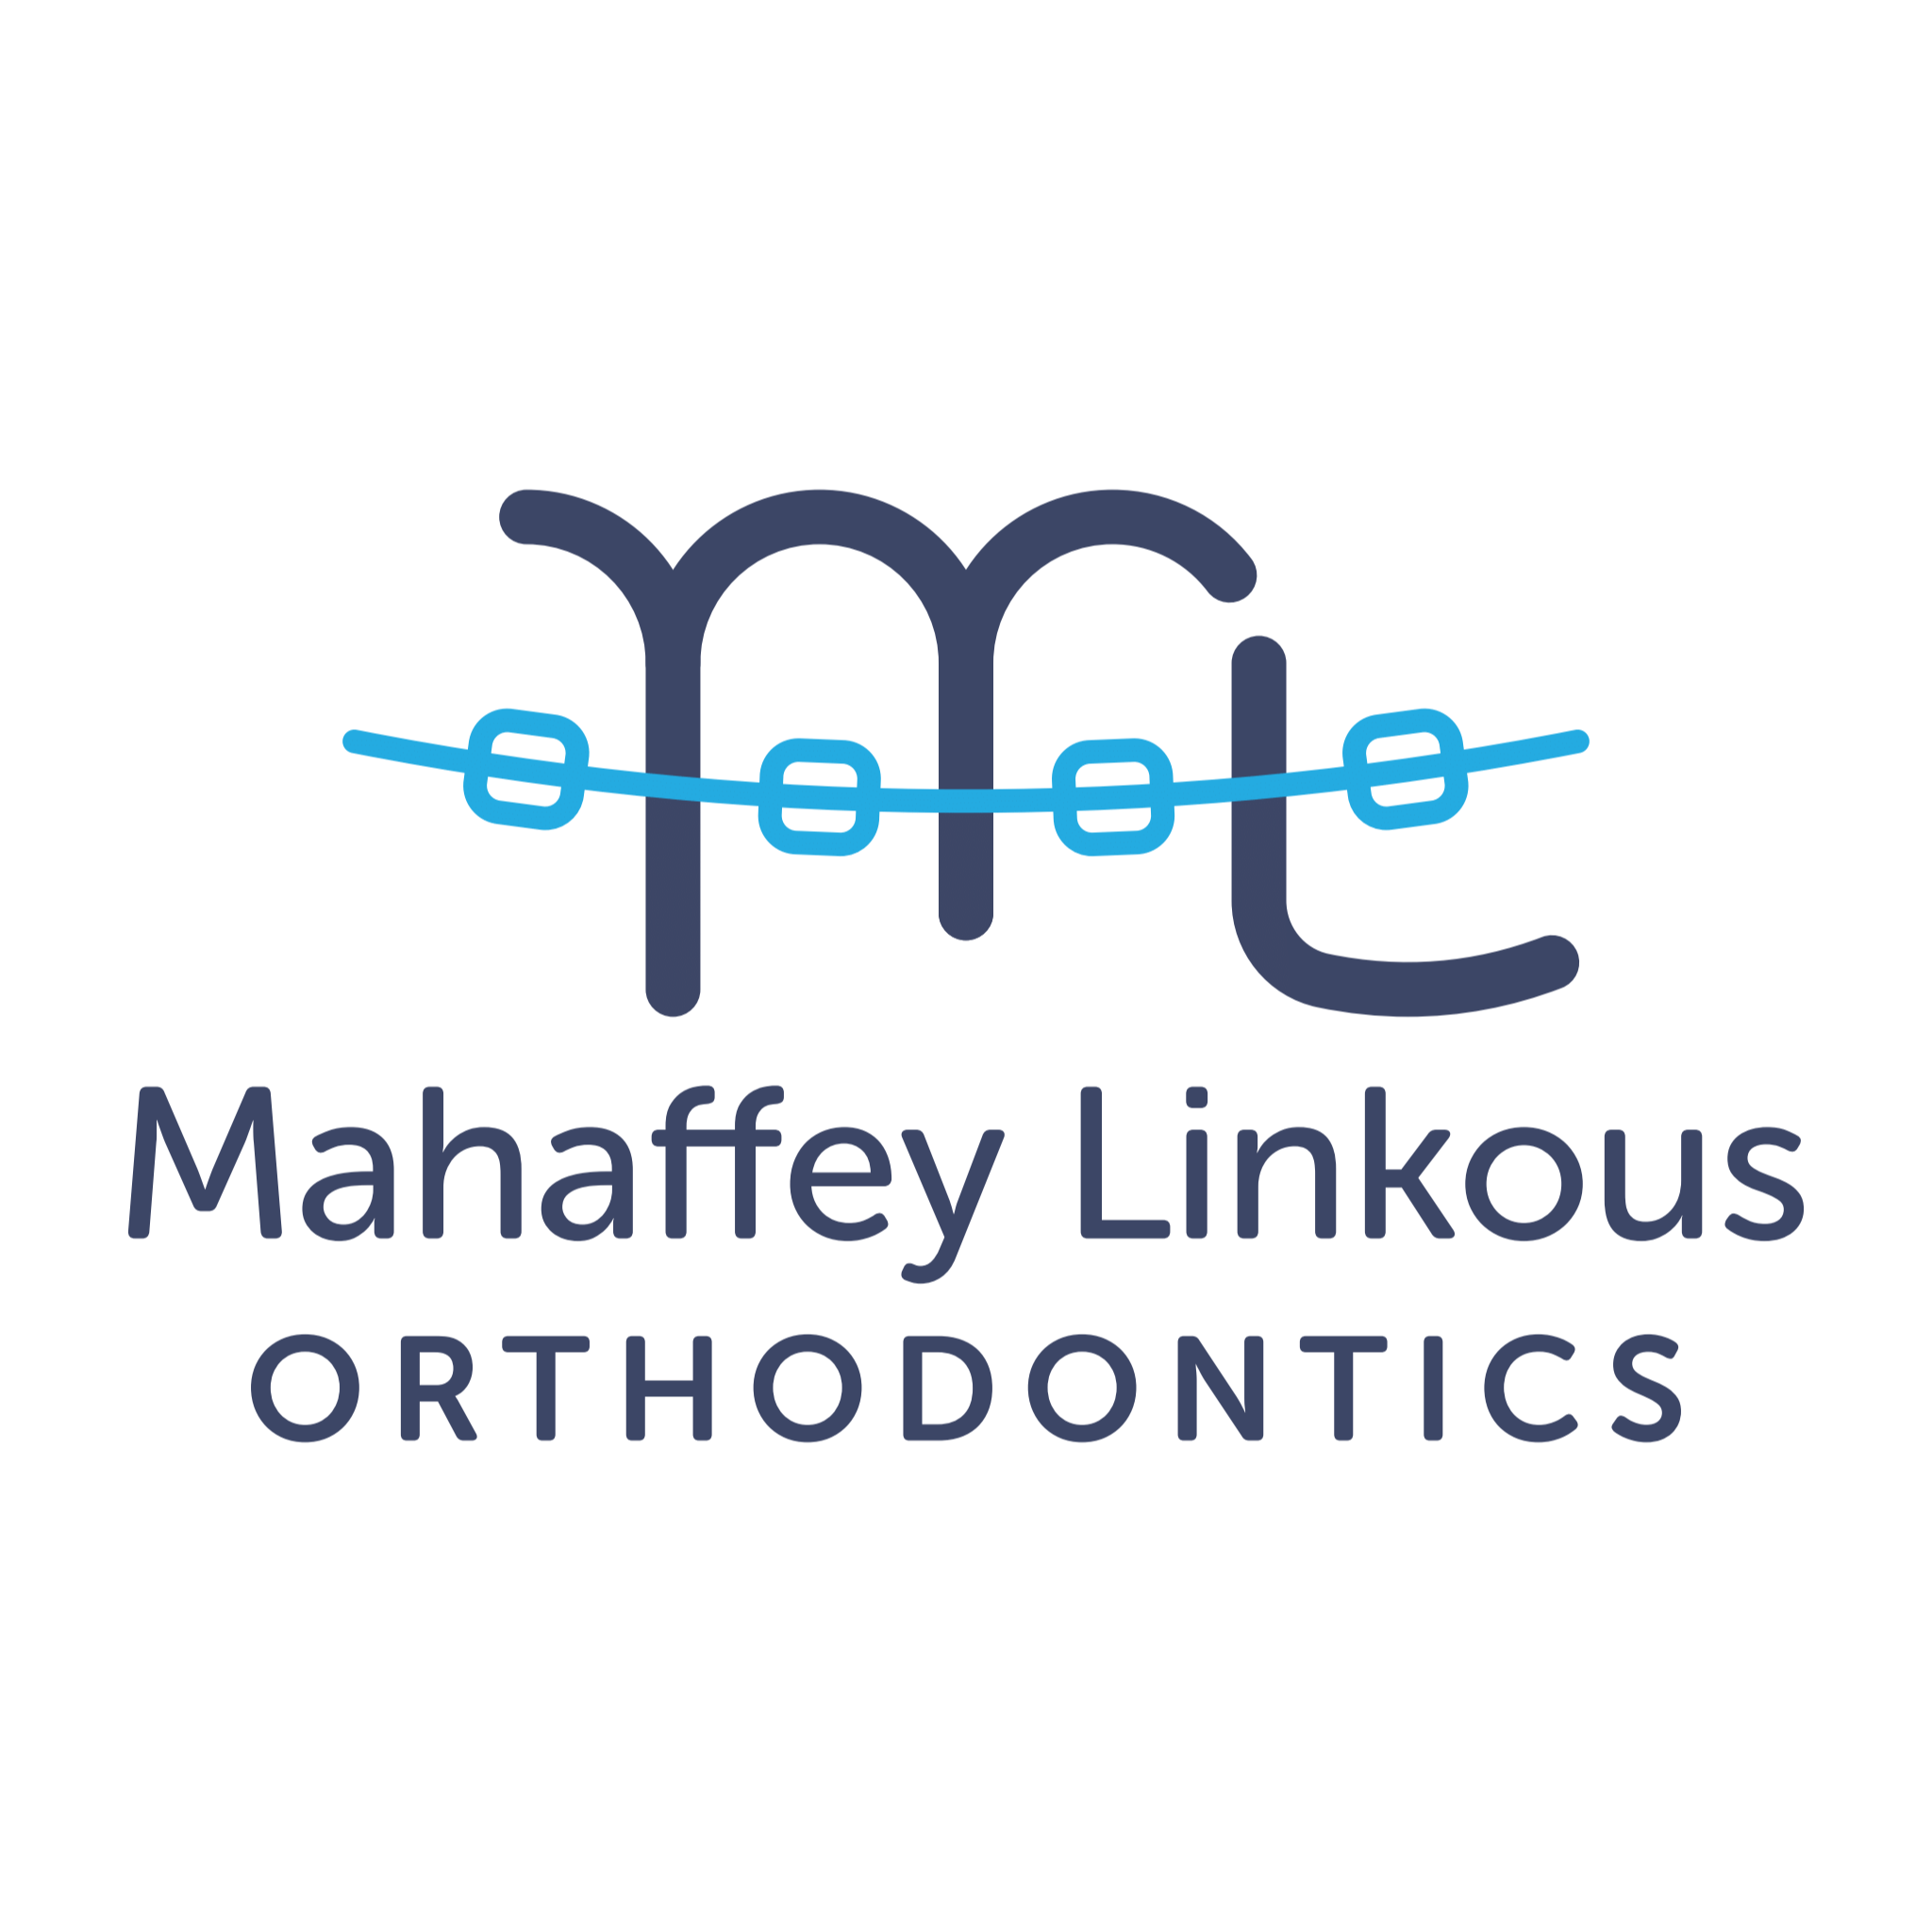 Mahaffey Linkous Orthodontics - Peachtree City, GA 30269 - (770)487-6439 | ShowMeLocal.com